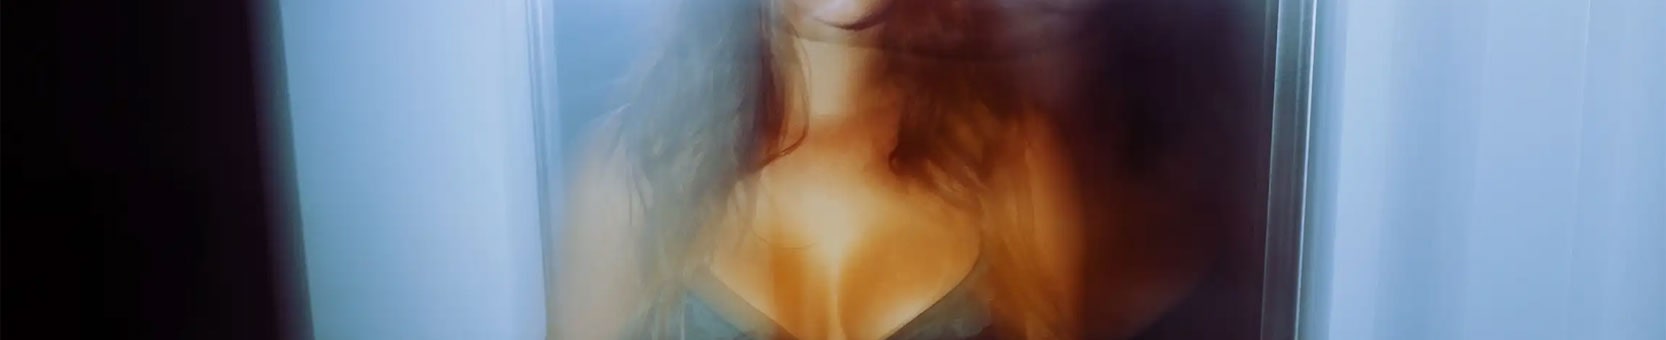 Eva Lovia Official Free Videos